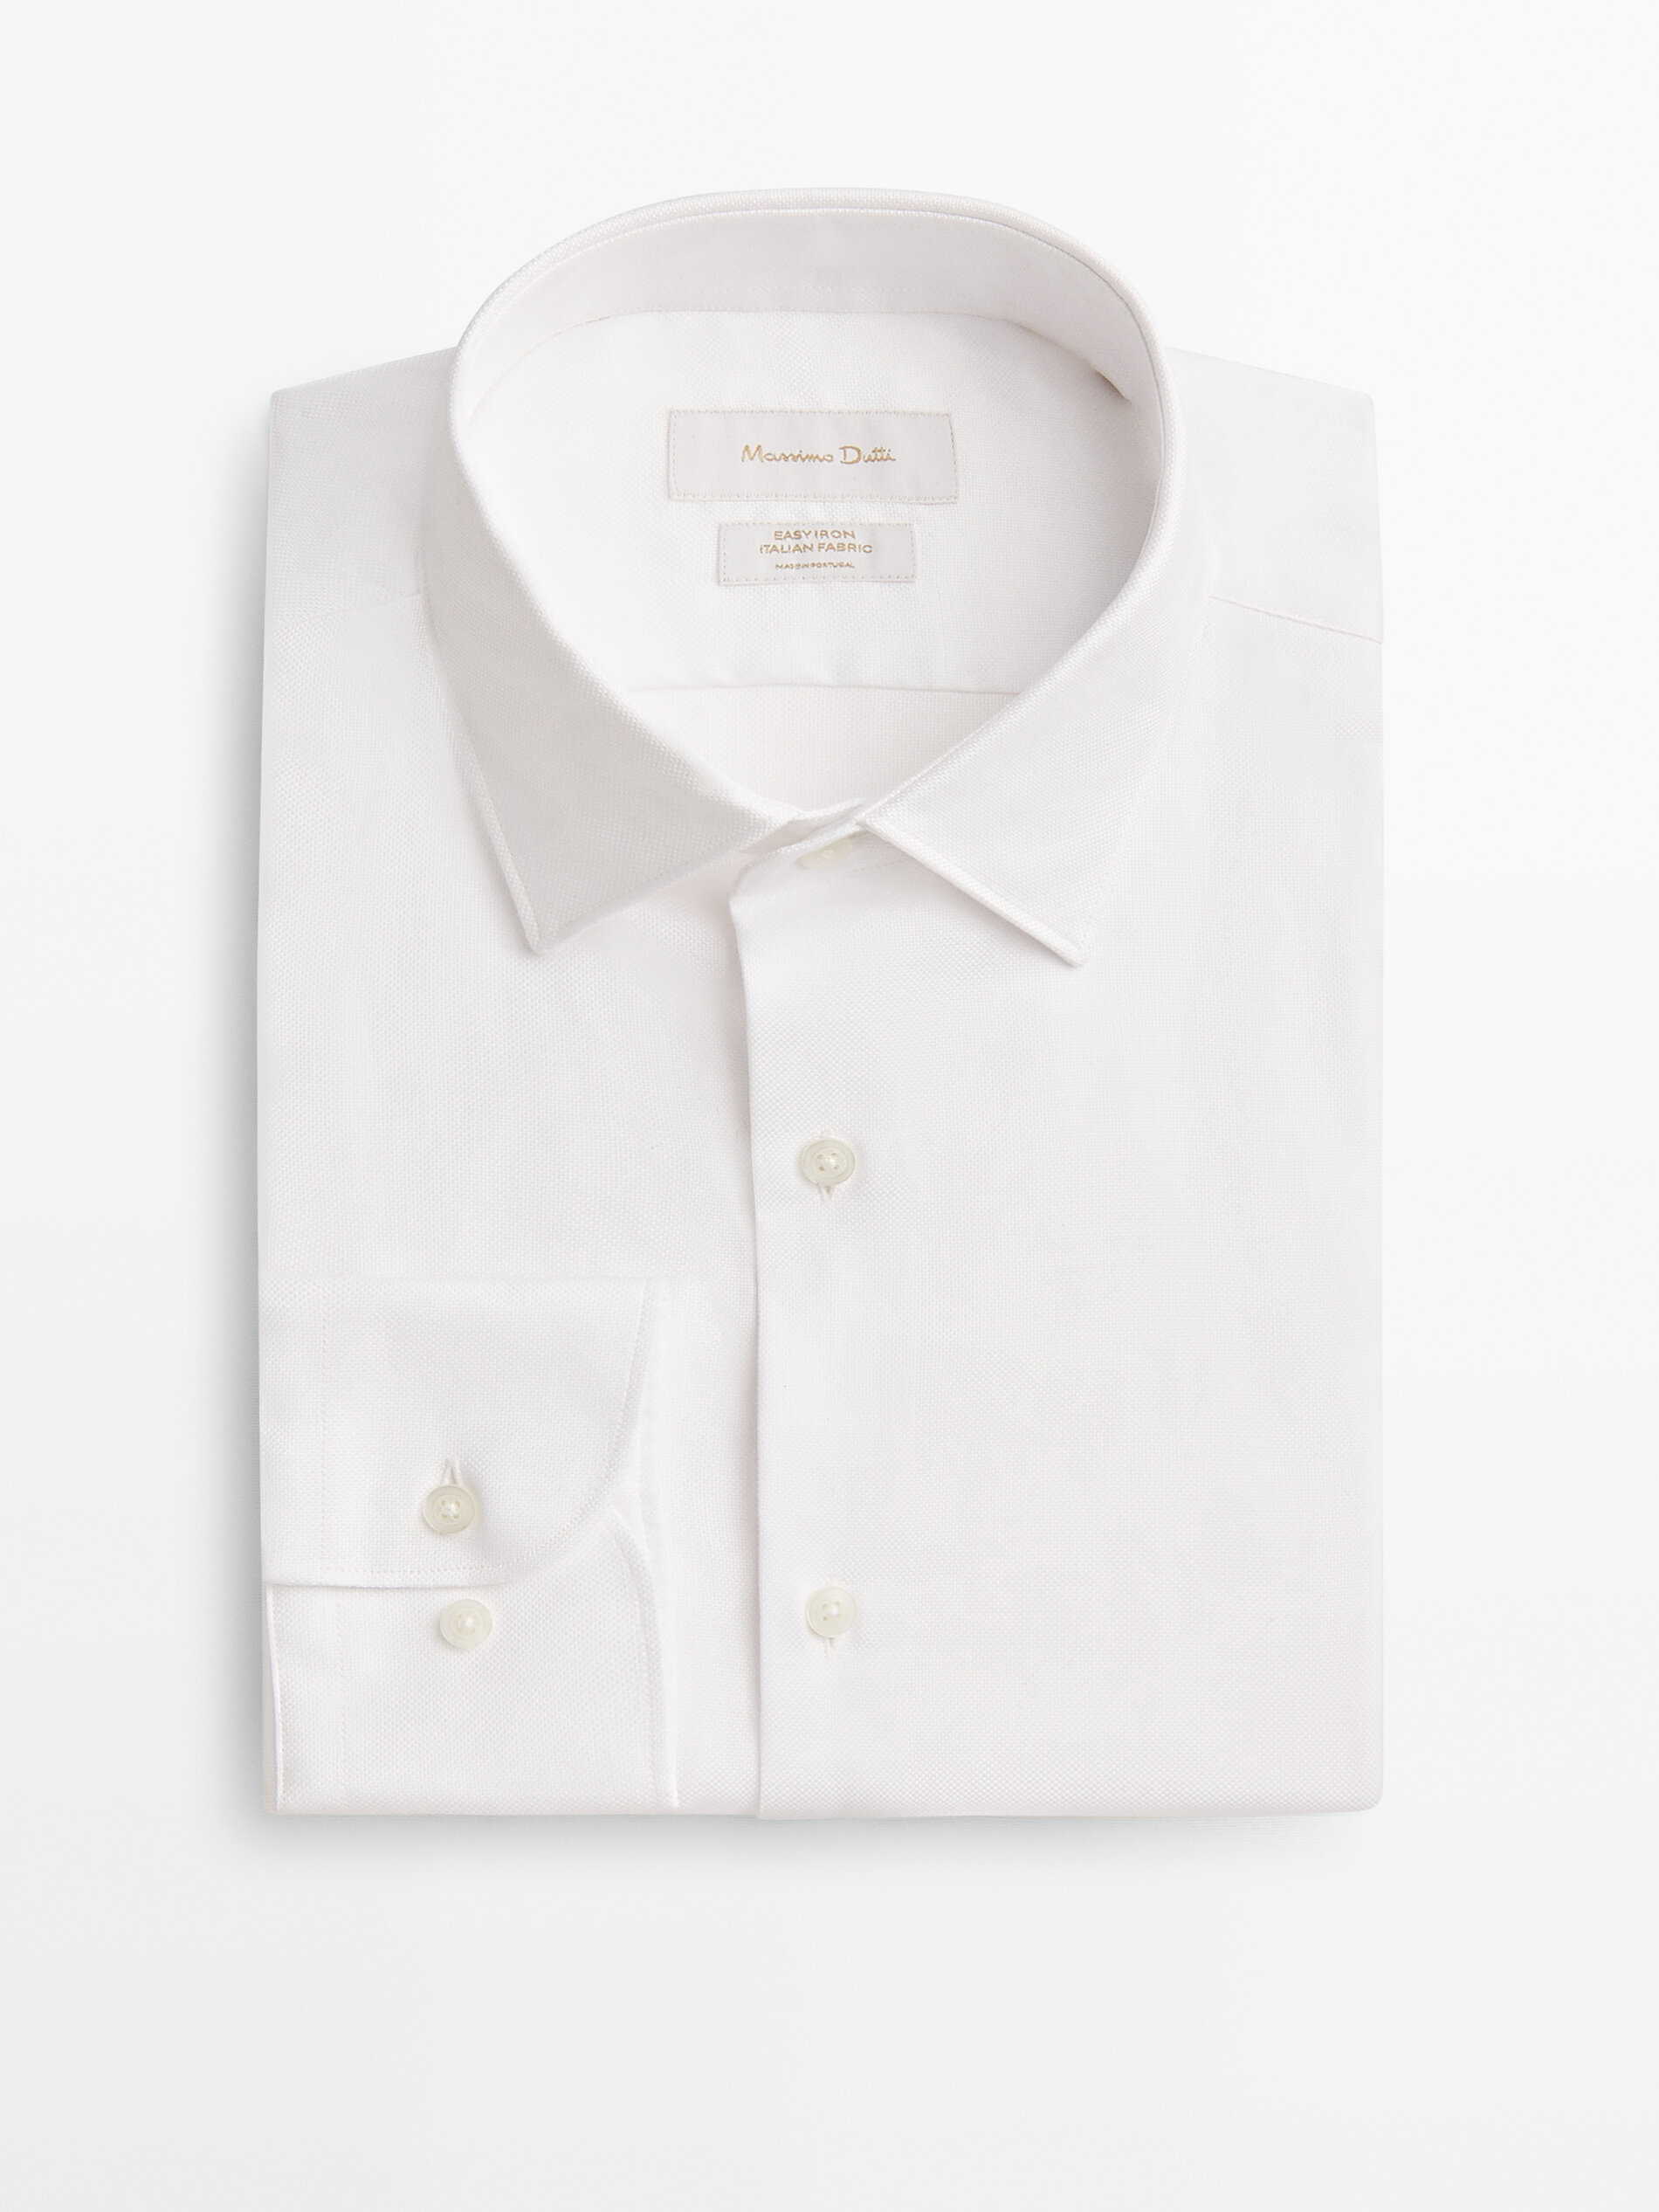 MODA UOMO Camicie & T-shirt Custom fit Massimo Dutti Camicia Blu/Bianco M sconto 59% 